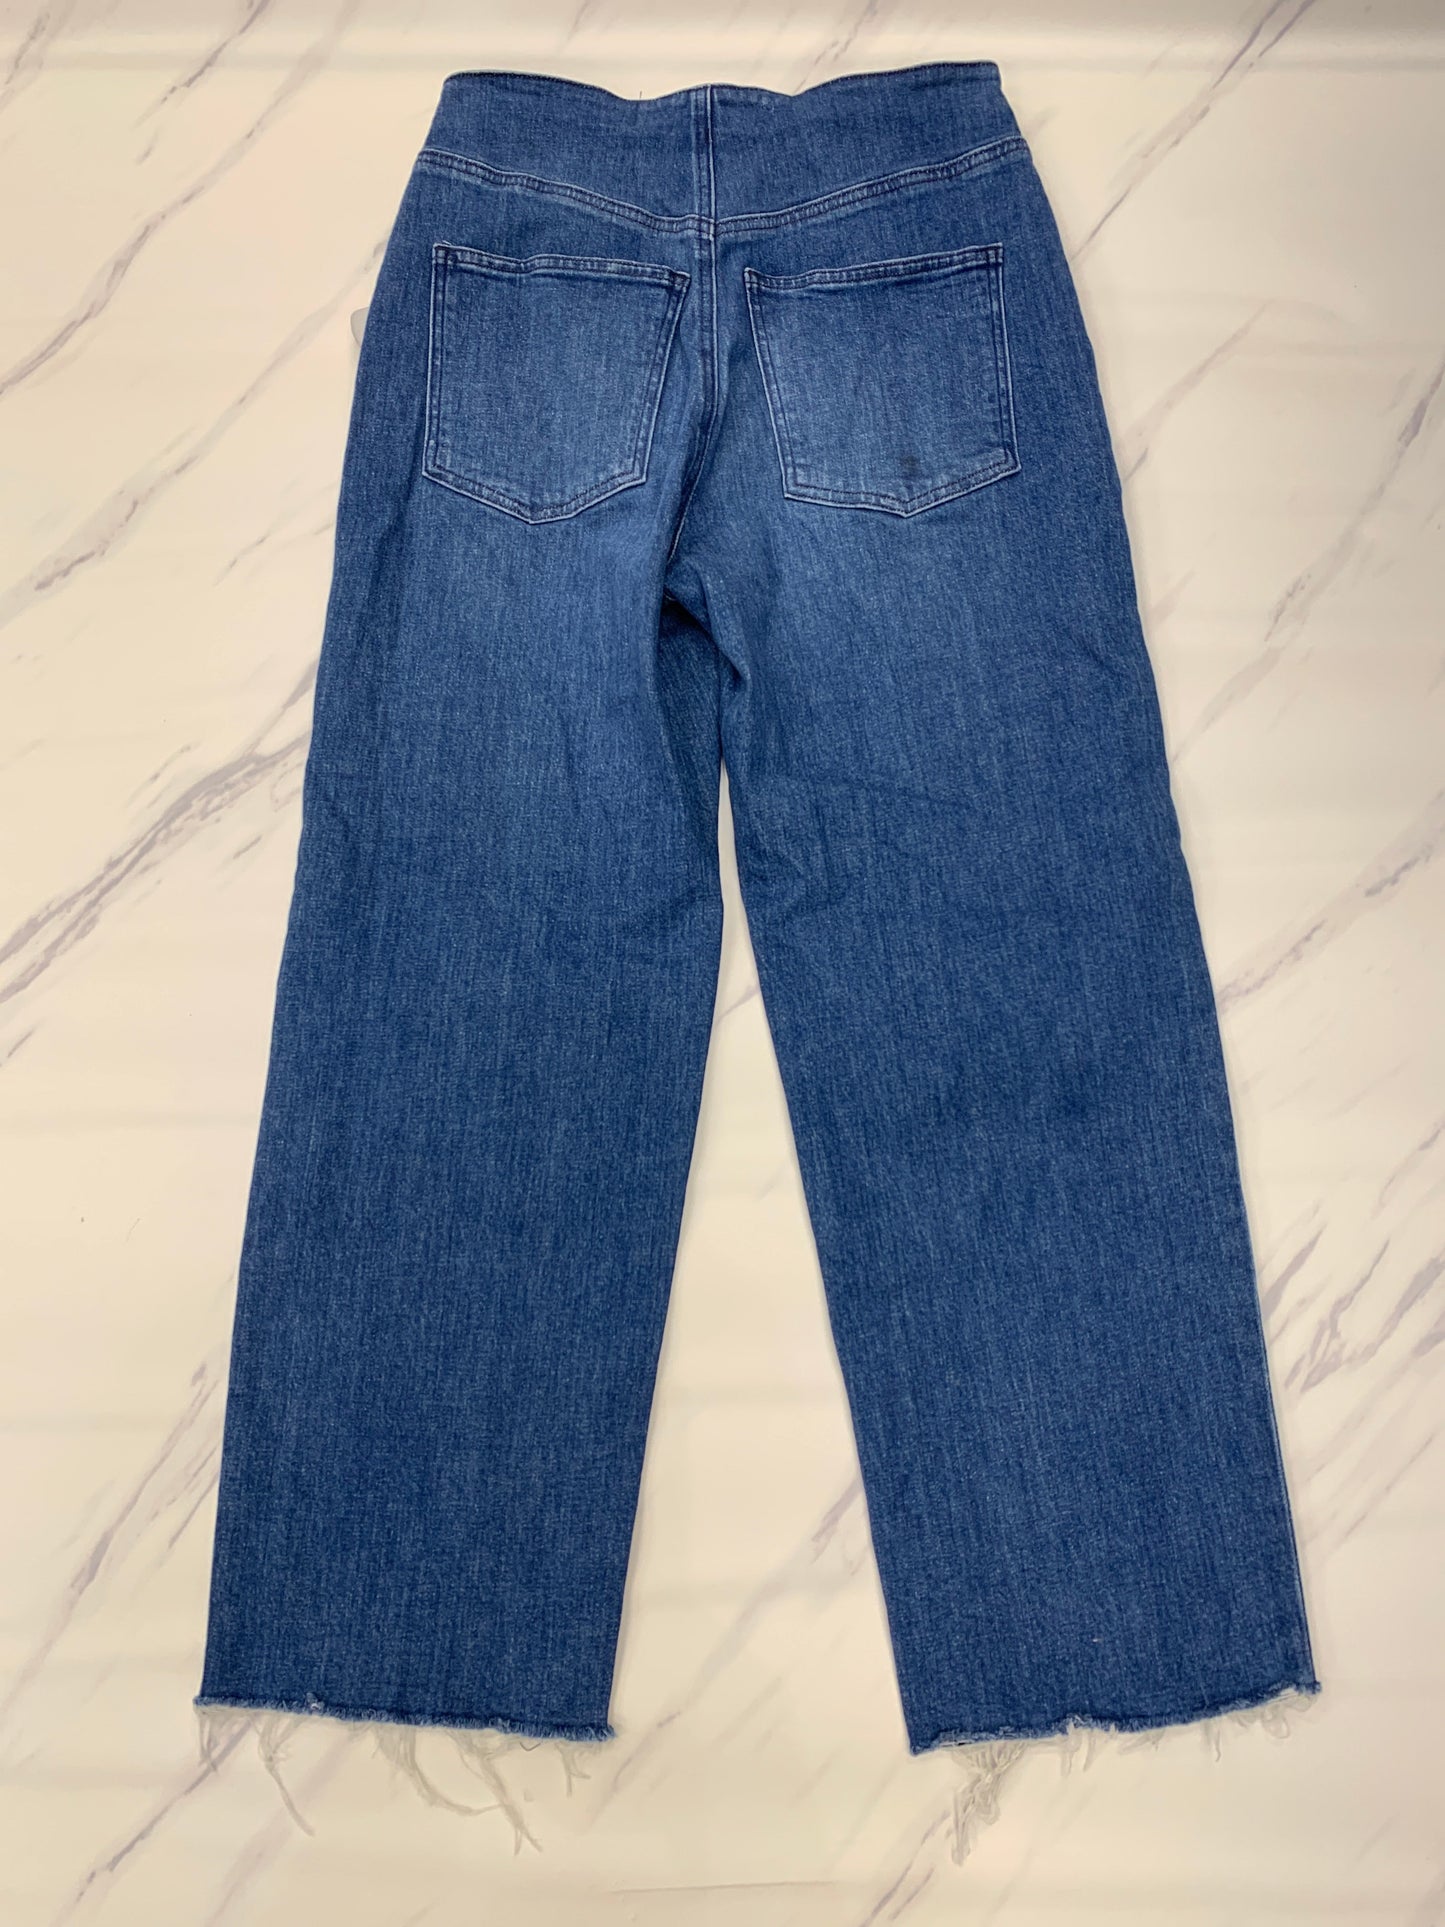 Jeans Designer Veronica Beard, Size 6